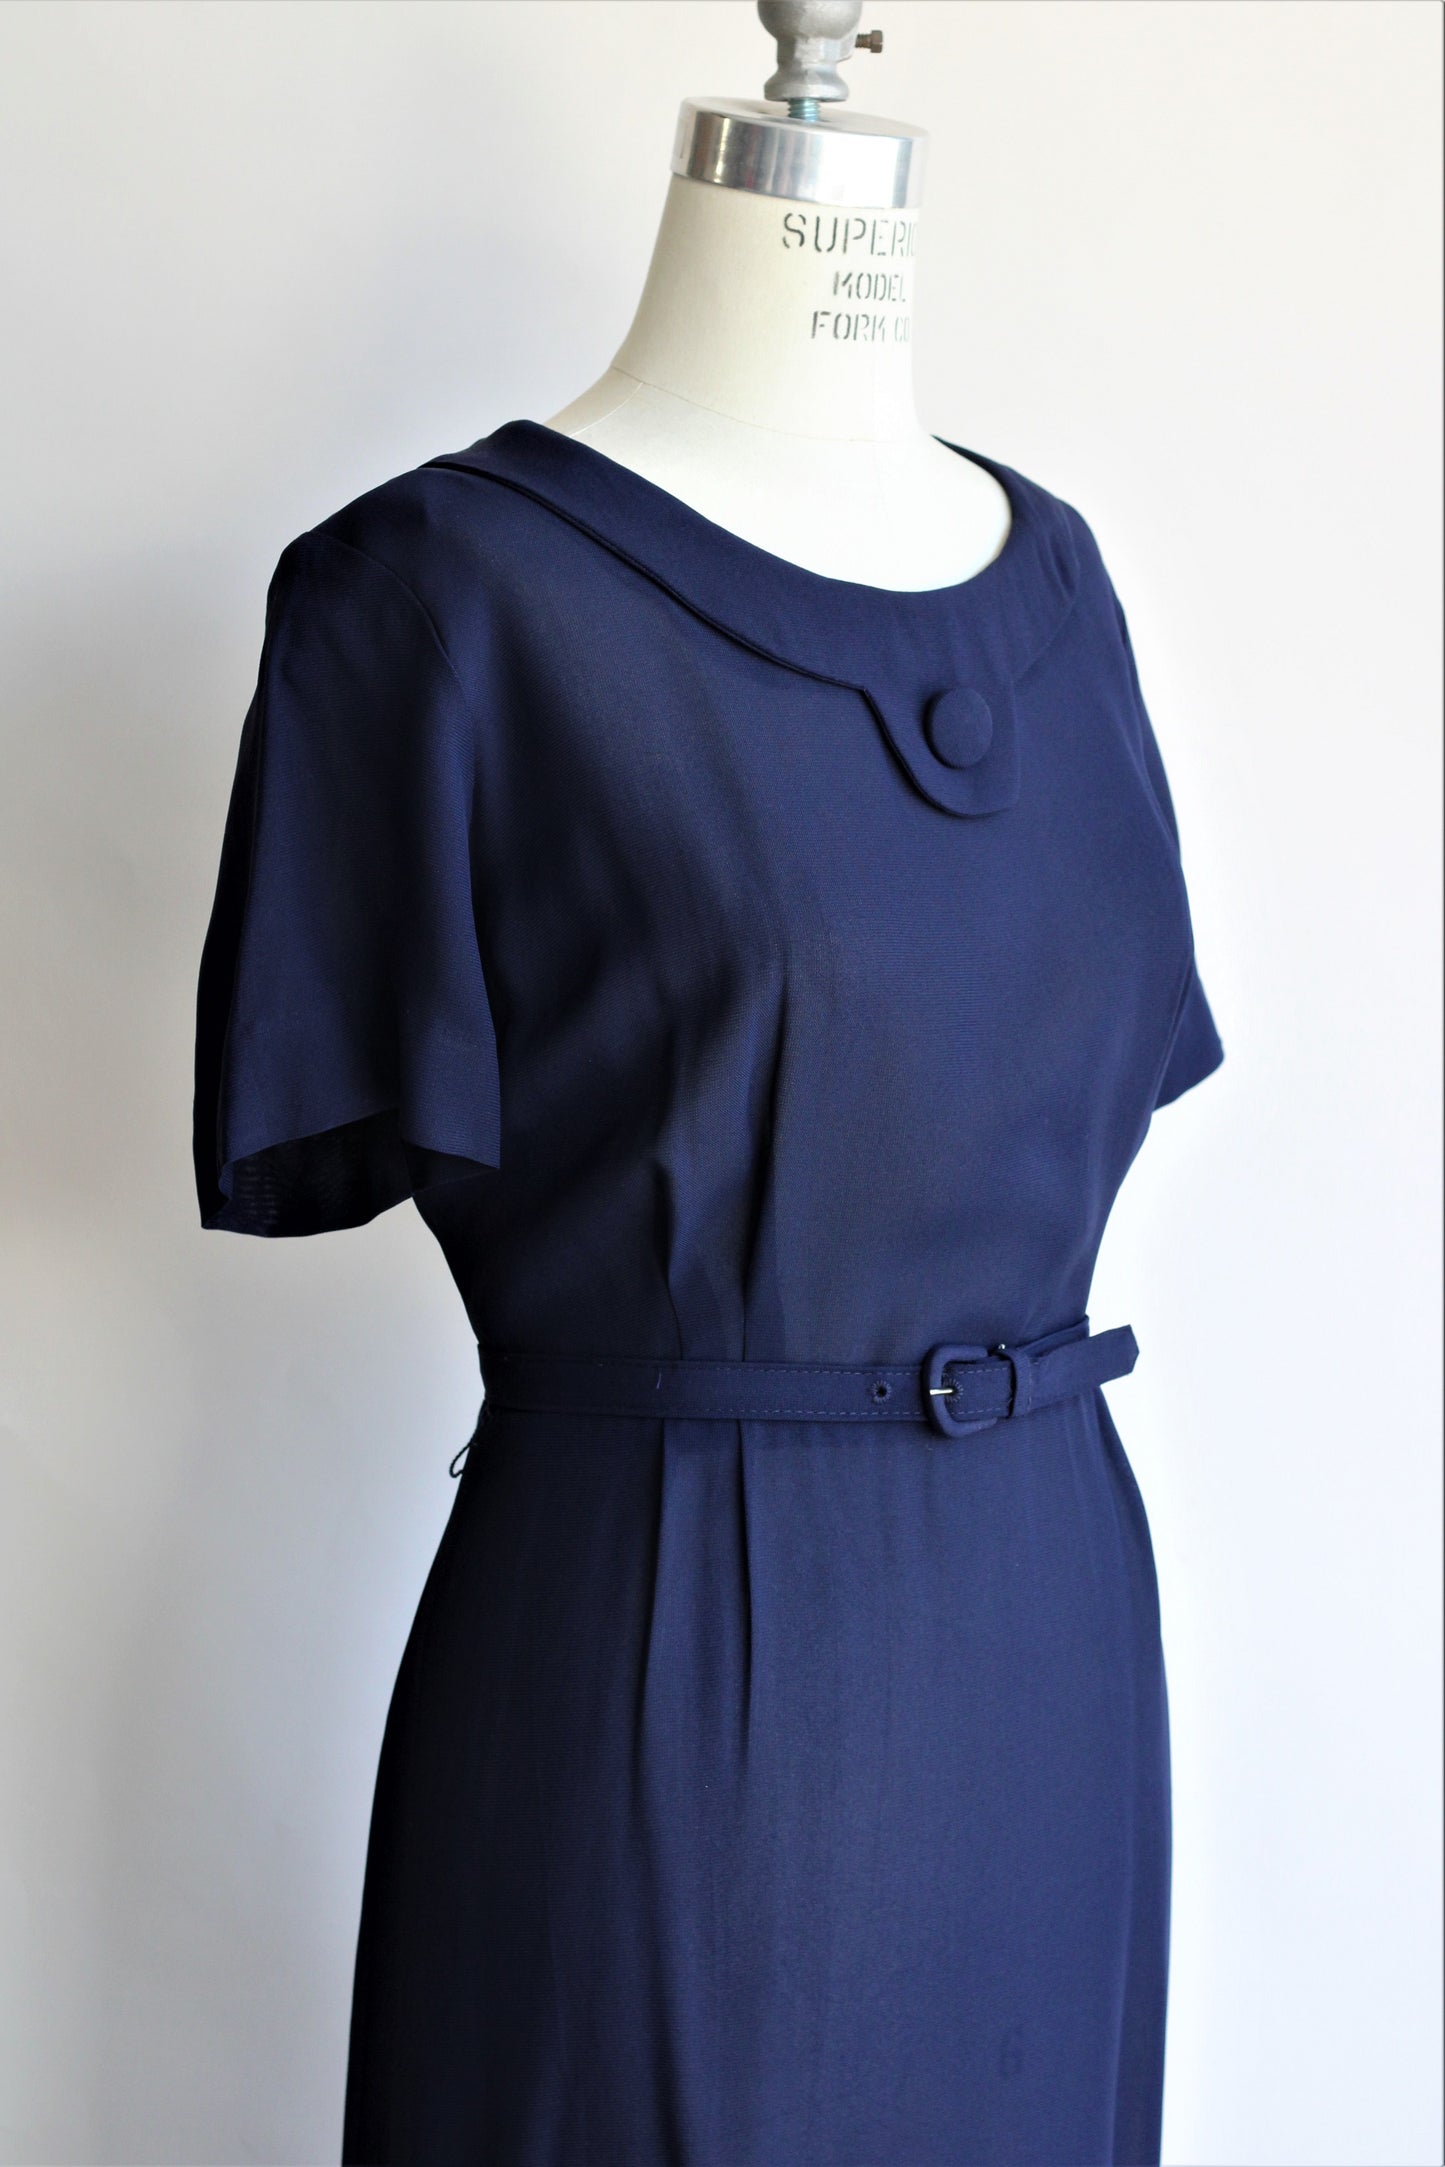 Vintage 1940s Navy Blue Rayon Dress With Belt